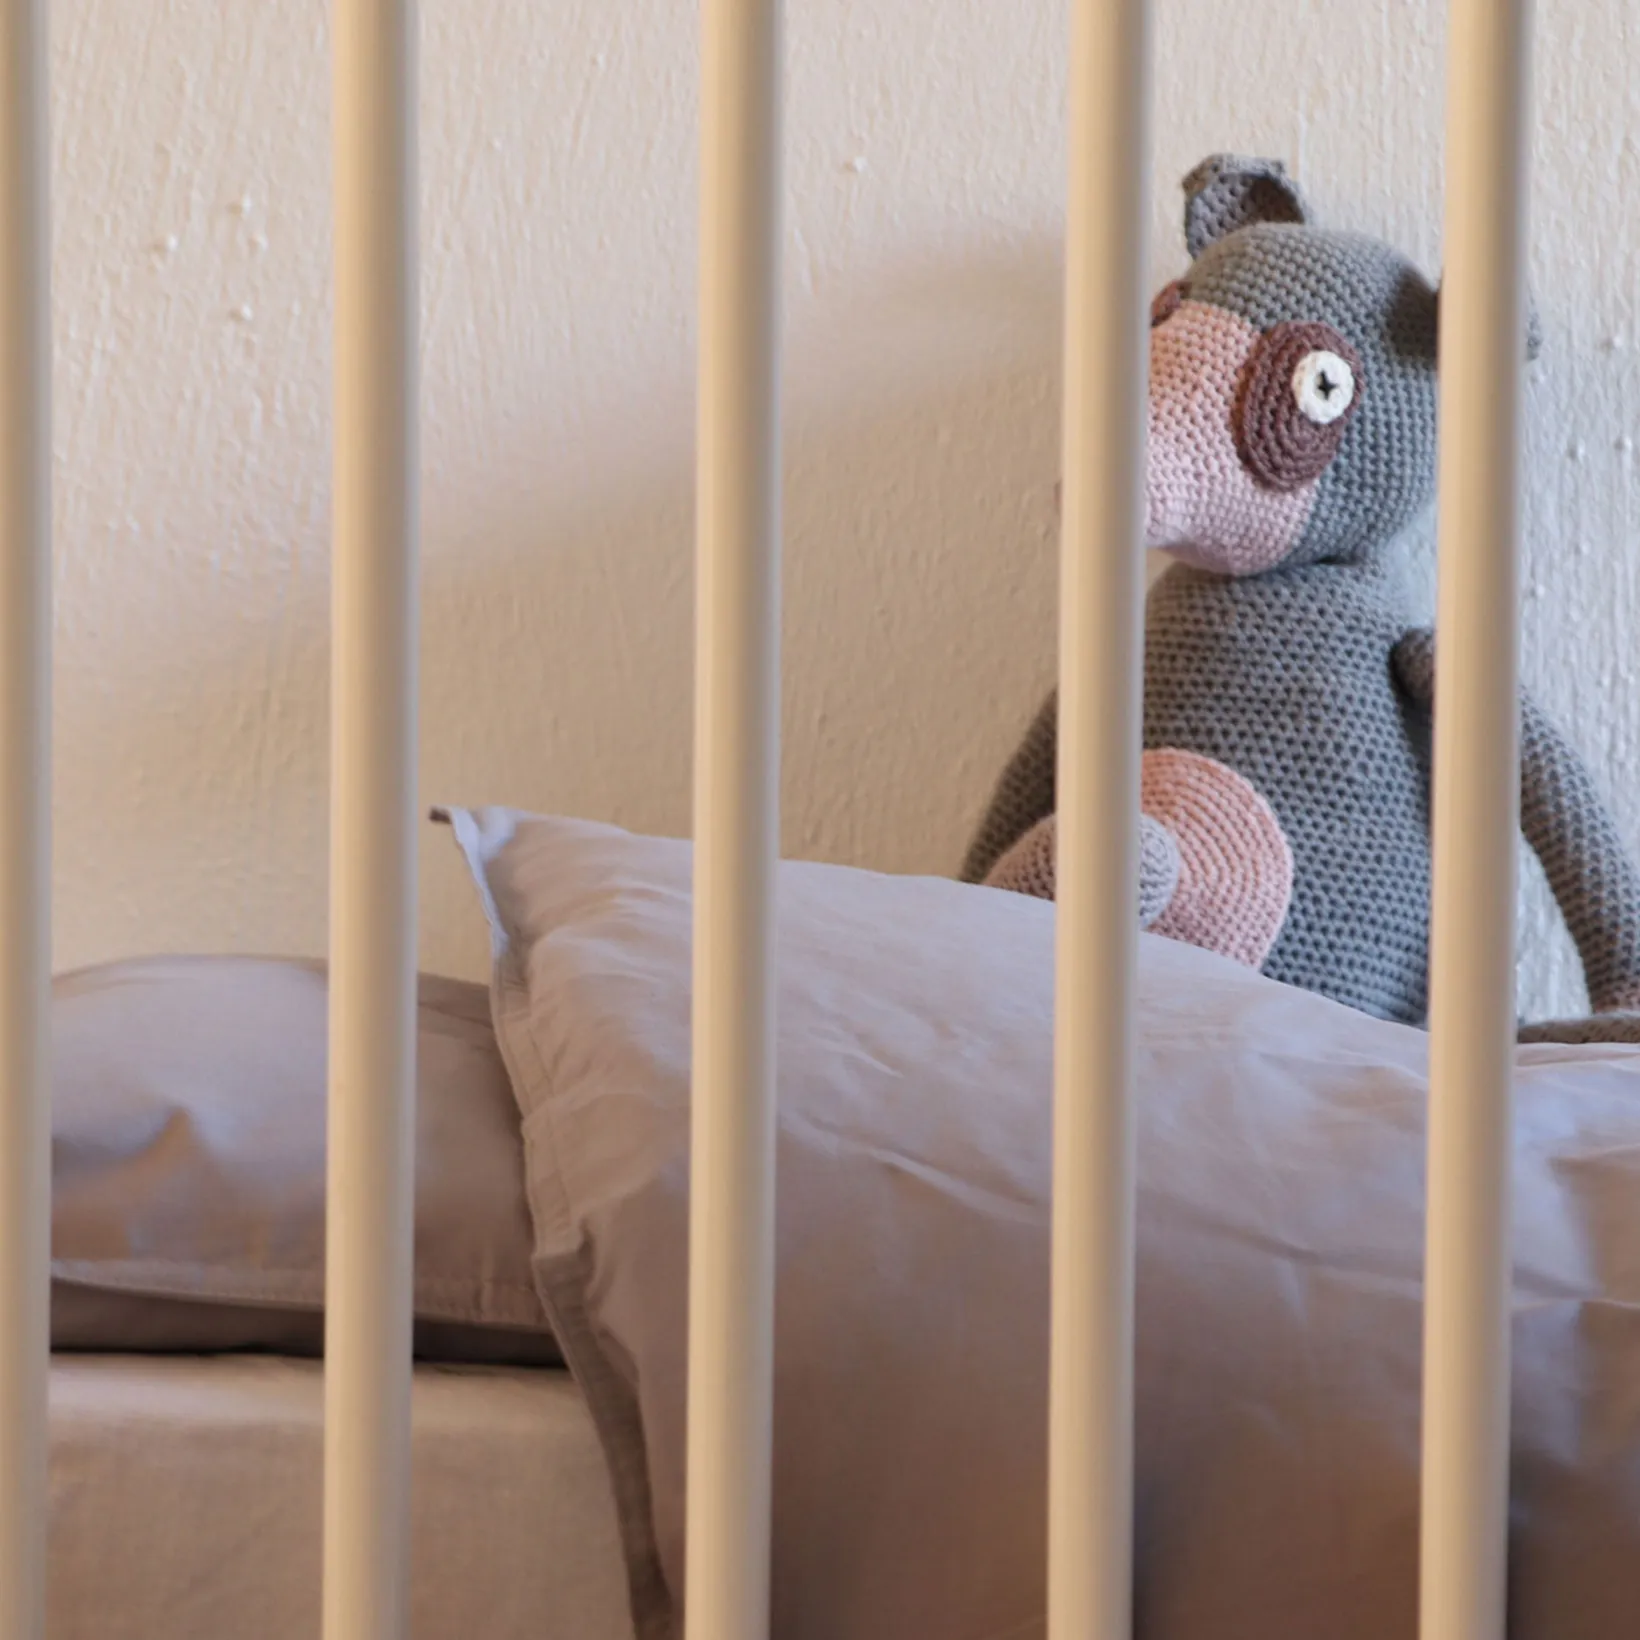 Køb OMHU Percale baby sengetøj 70x100 cm lys grå lige her! | Lækker Hurtig